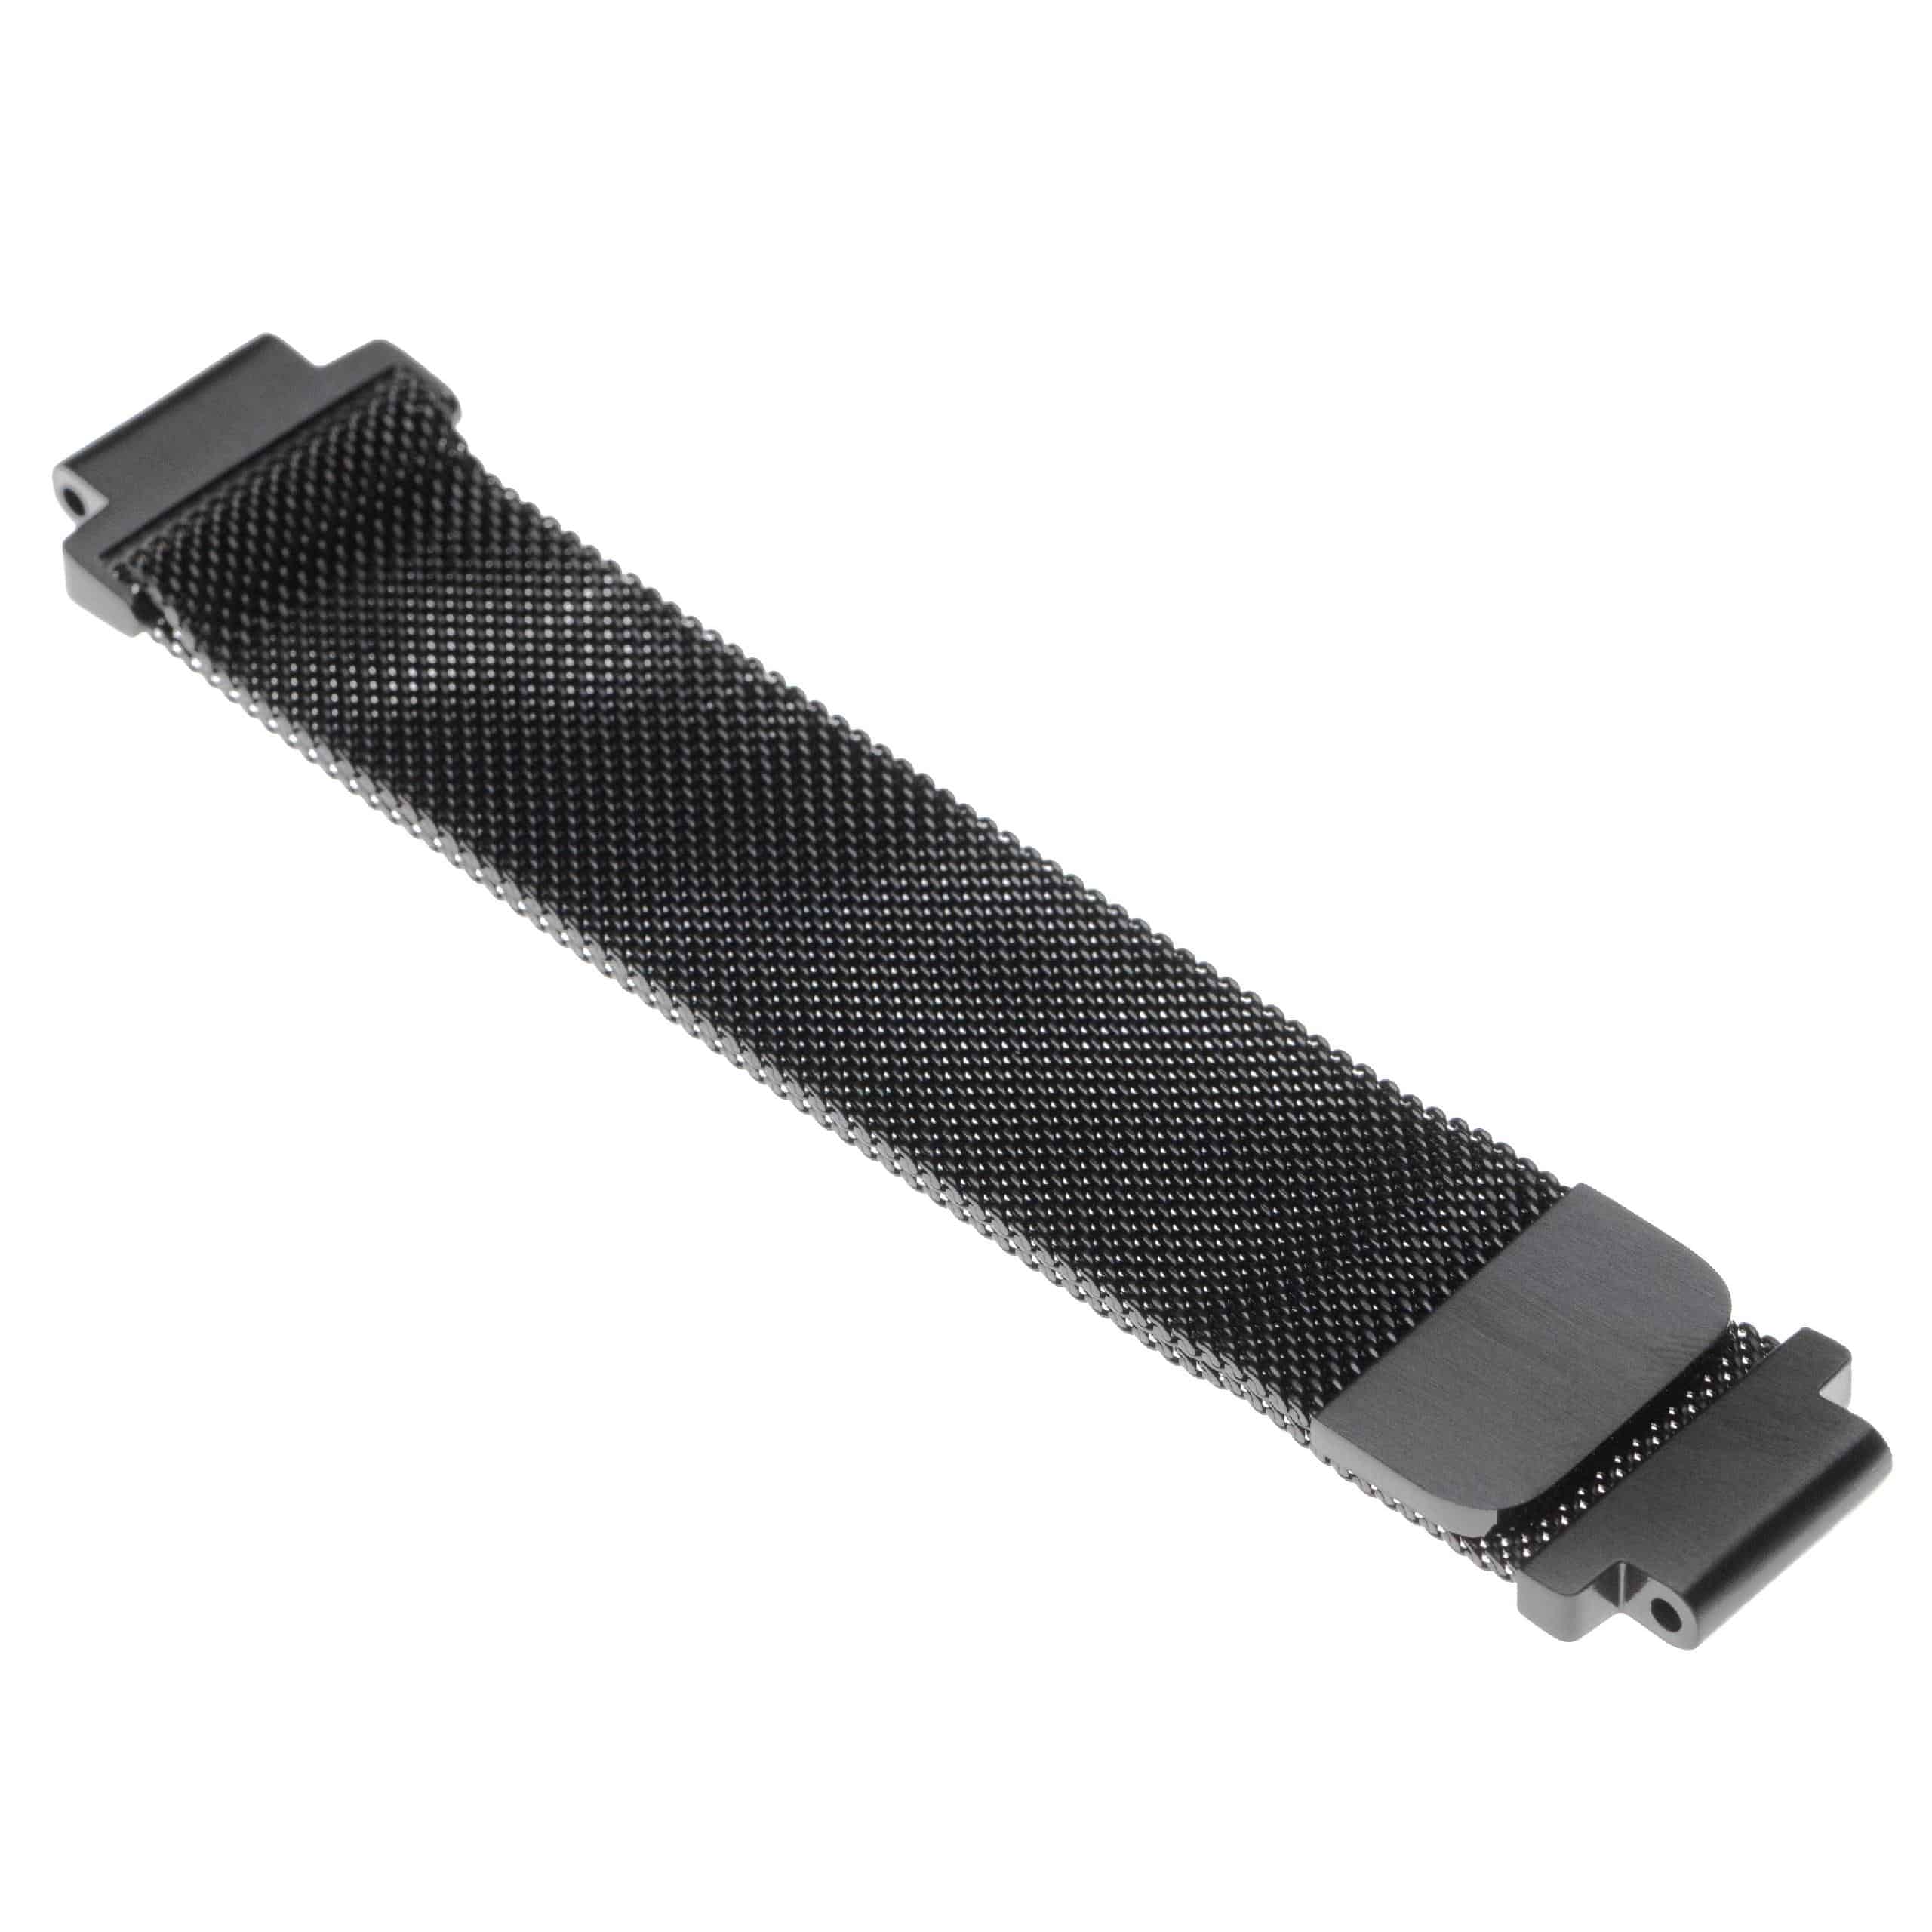 cinturino per Garmin Forerunner / Approach Smartwatch - fino a 224 mm circonferenza del polso, acciaio inox, n